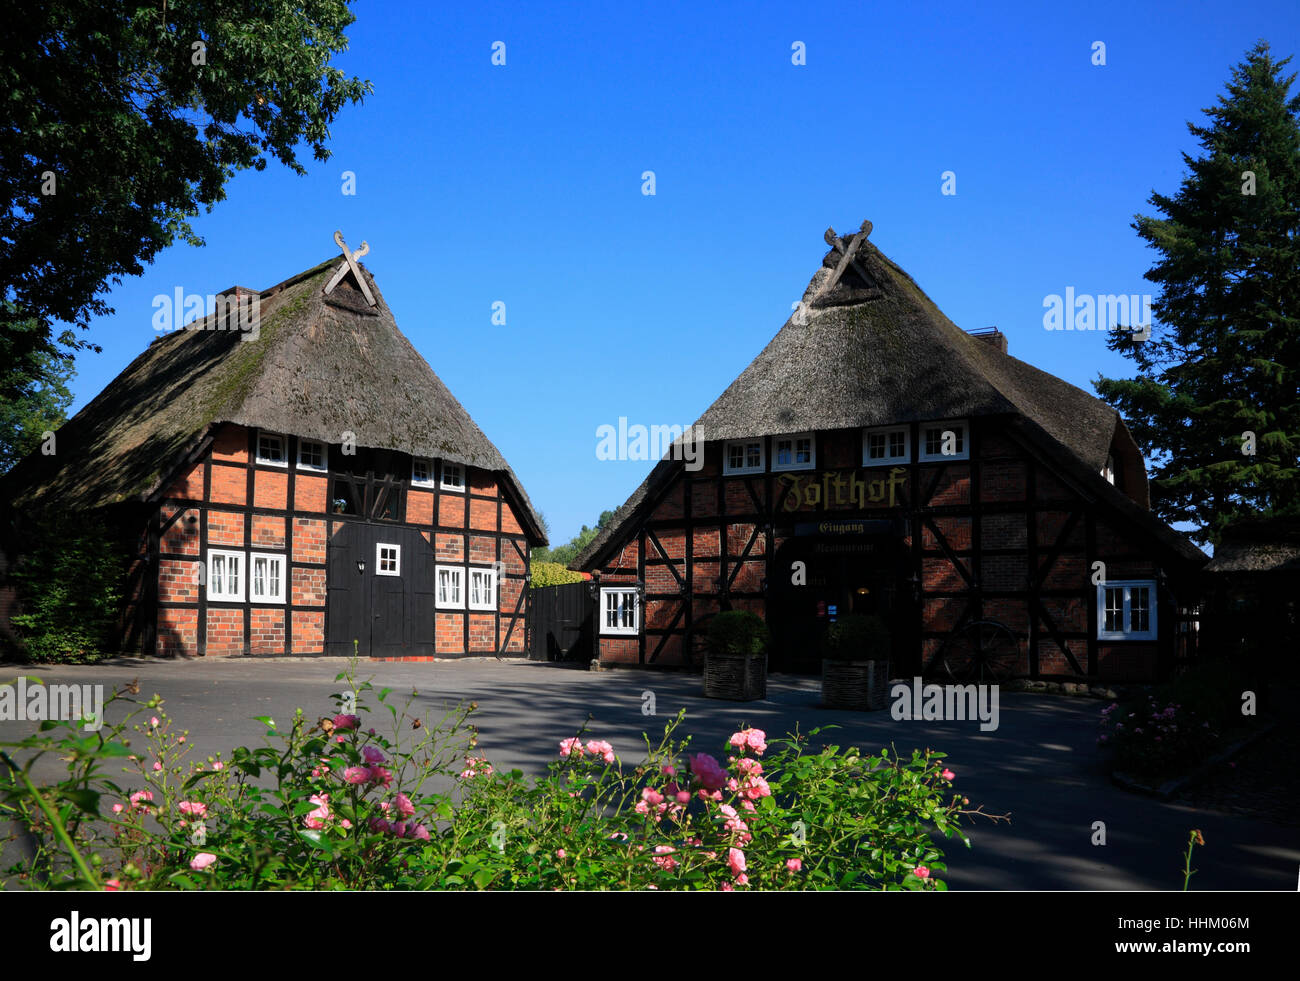 Hotel und Restaurant JOSTHOF, Salzhausen Lueneburger Heide, Lower Saxony, Germany, Europe Stock Photo